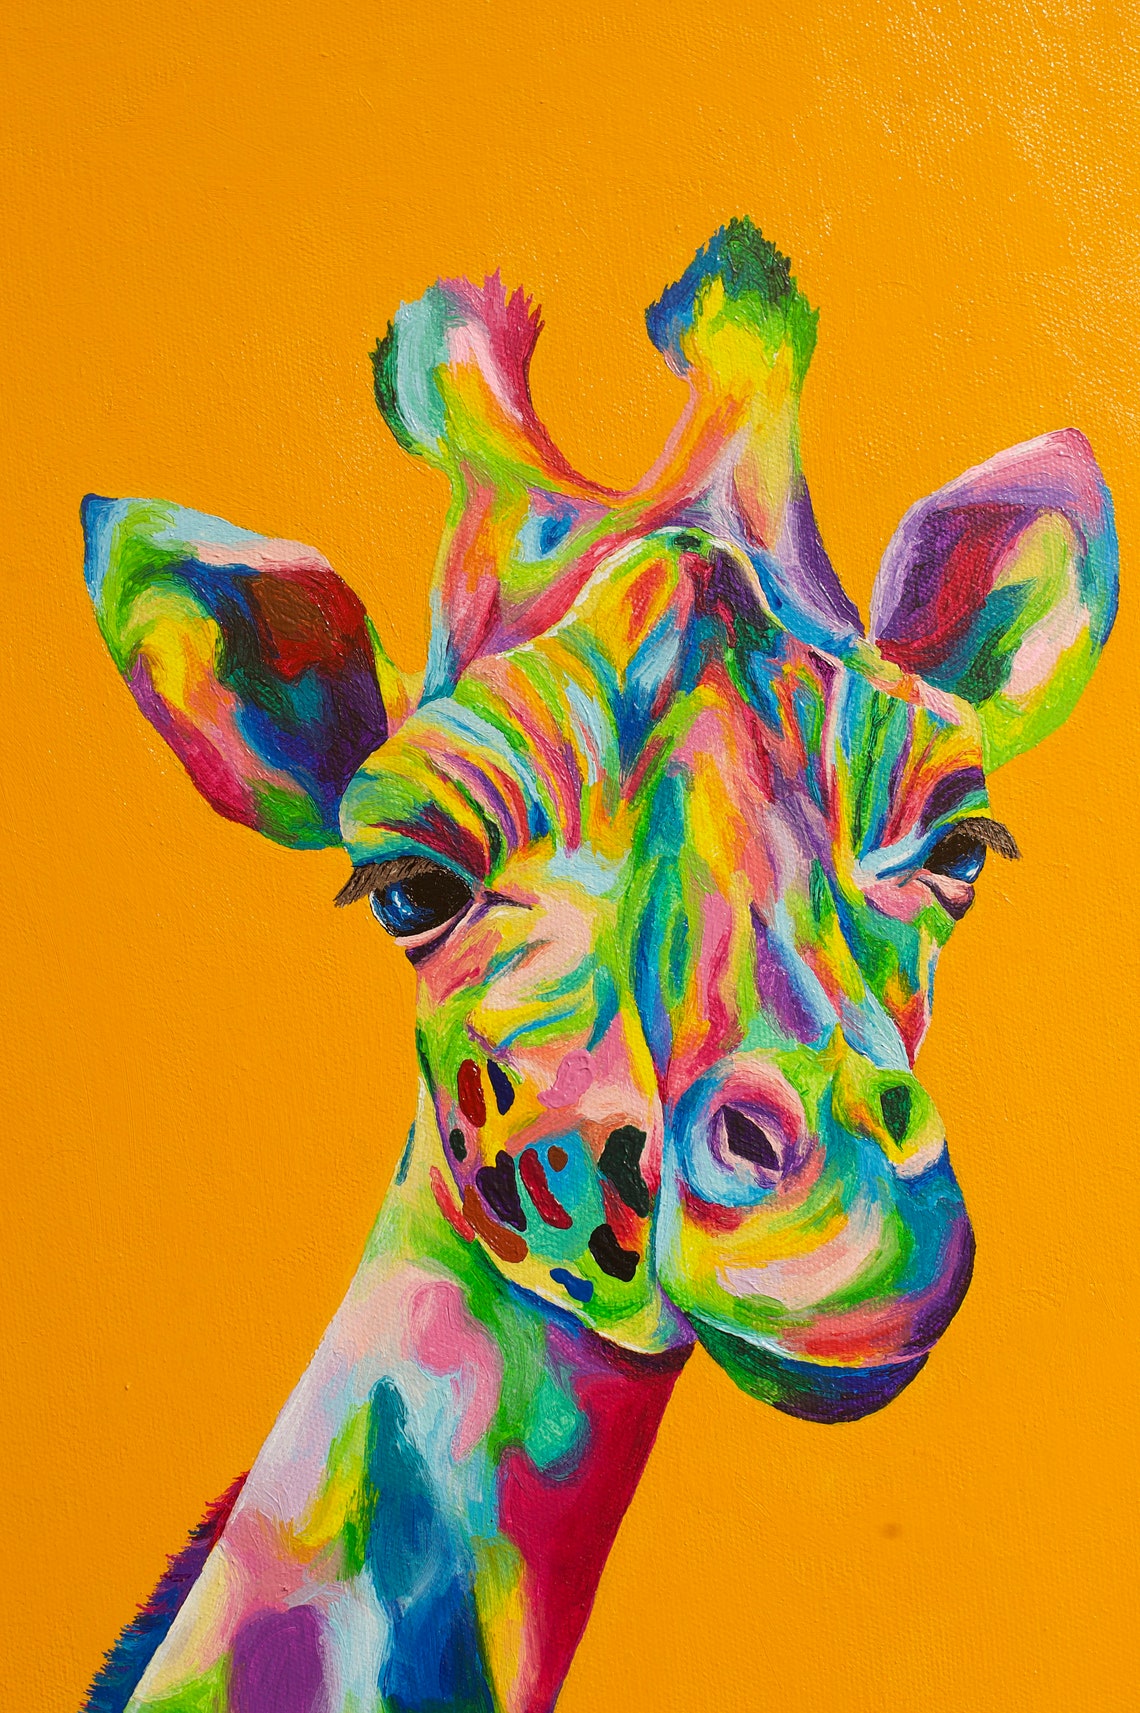 Melvin the Giraffe Original Painting | Etsy